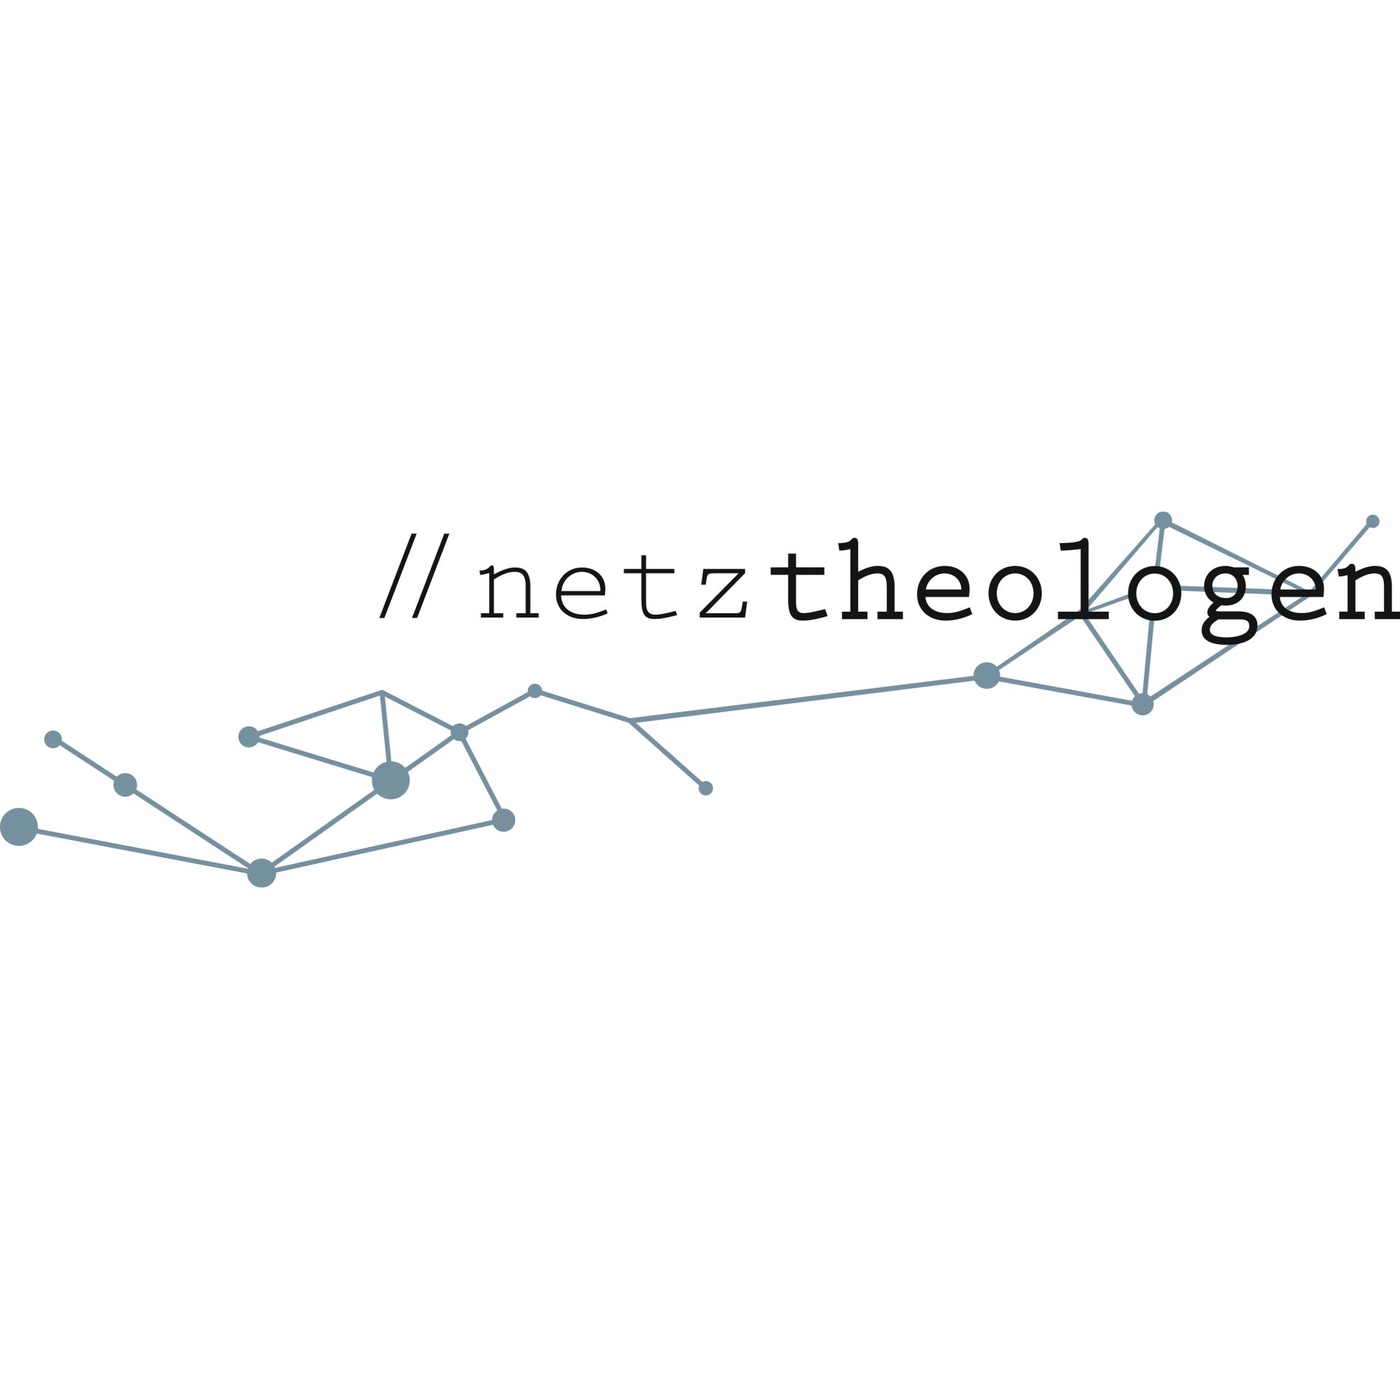 Netztheologen